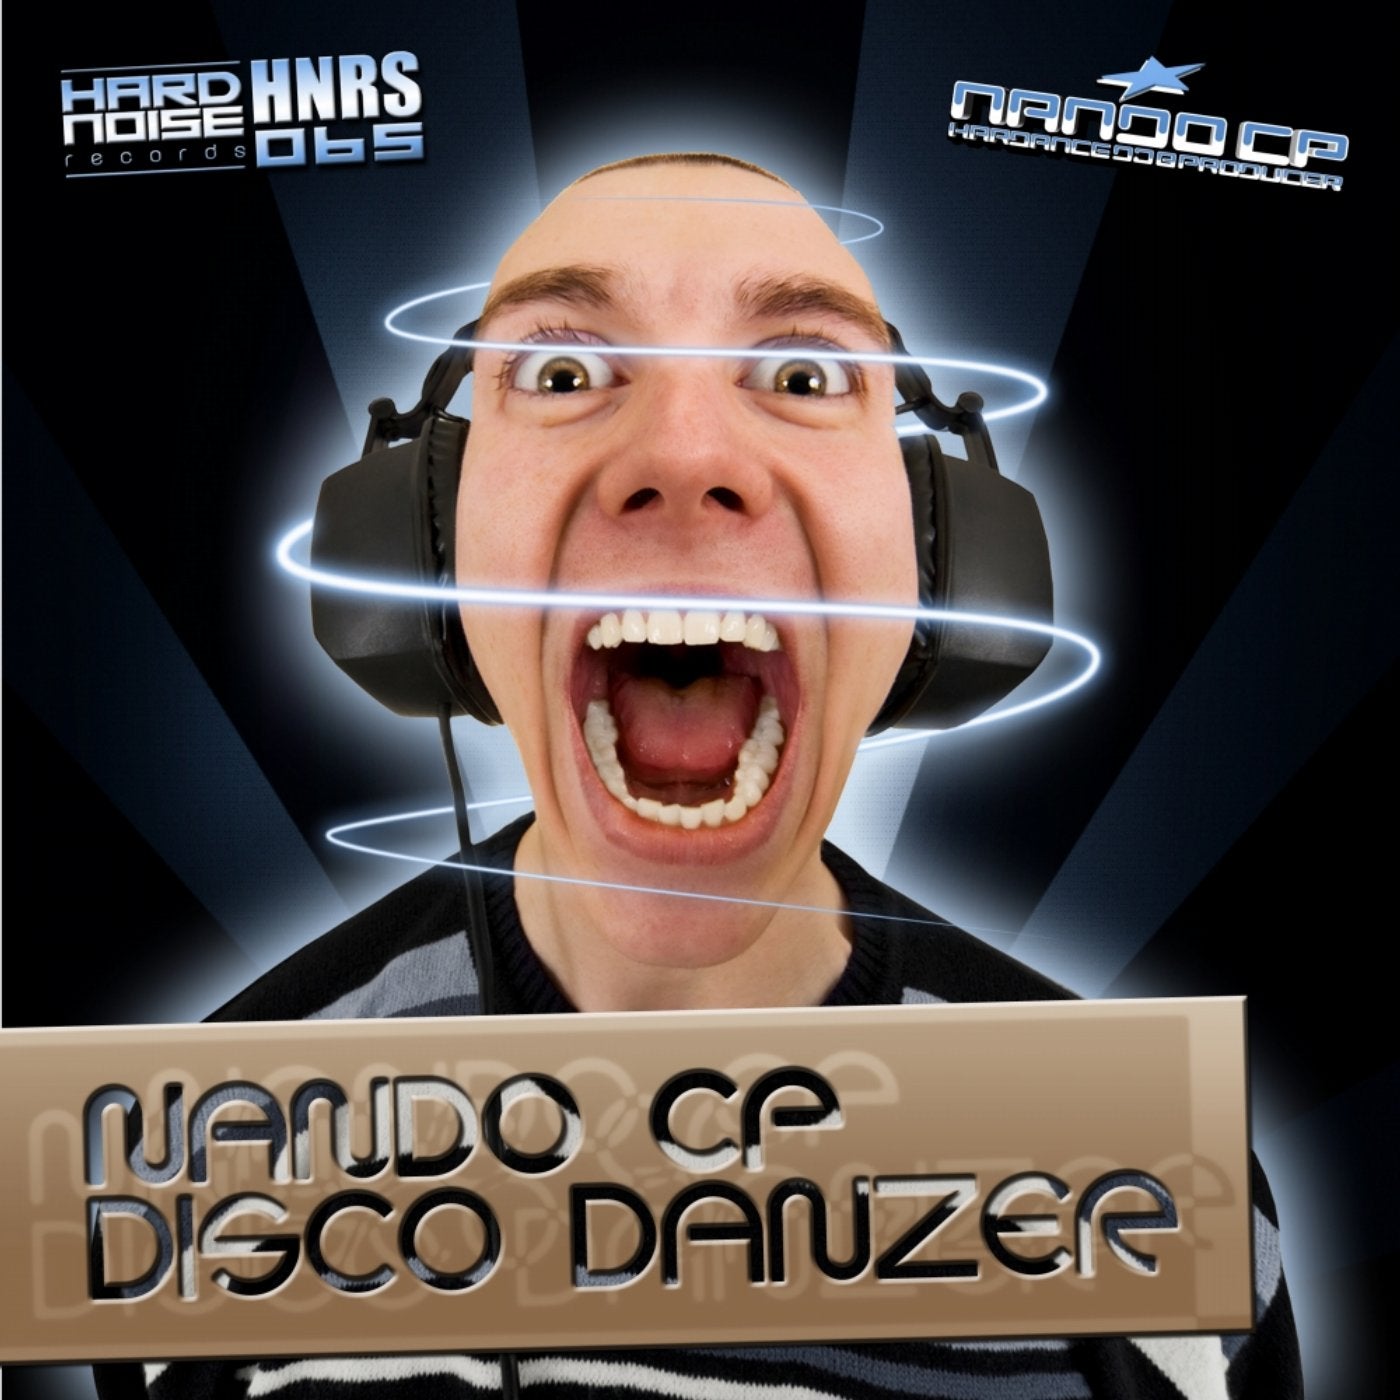 Disco Danzer